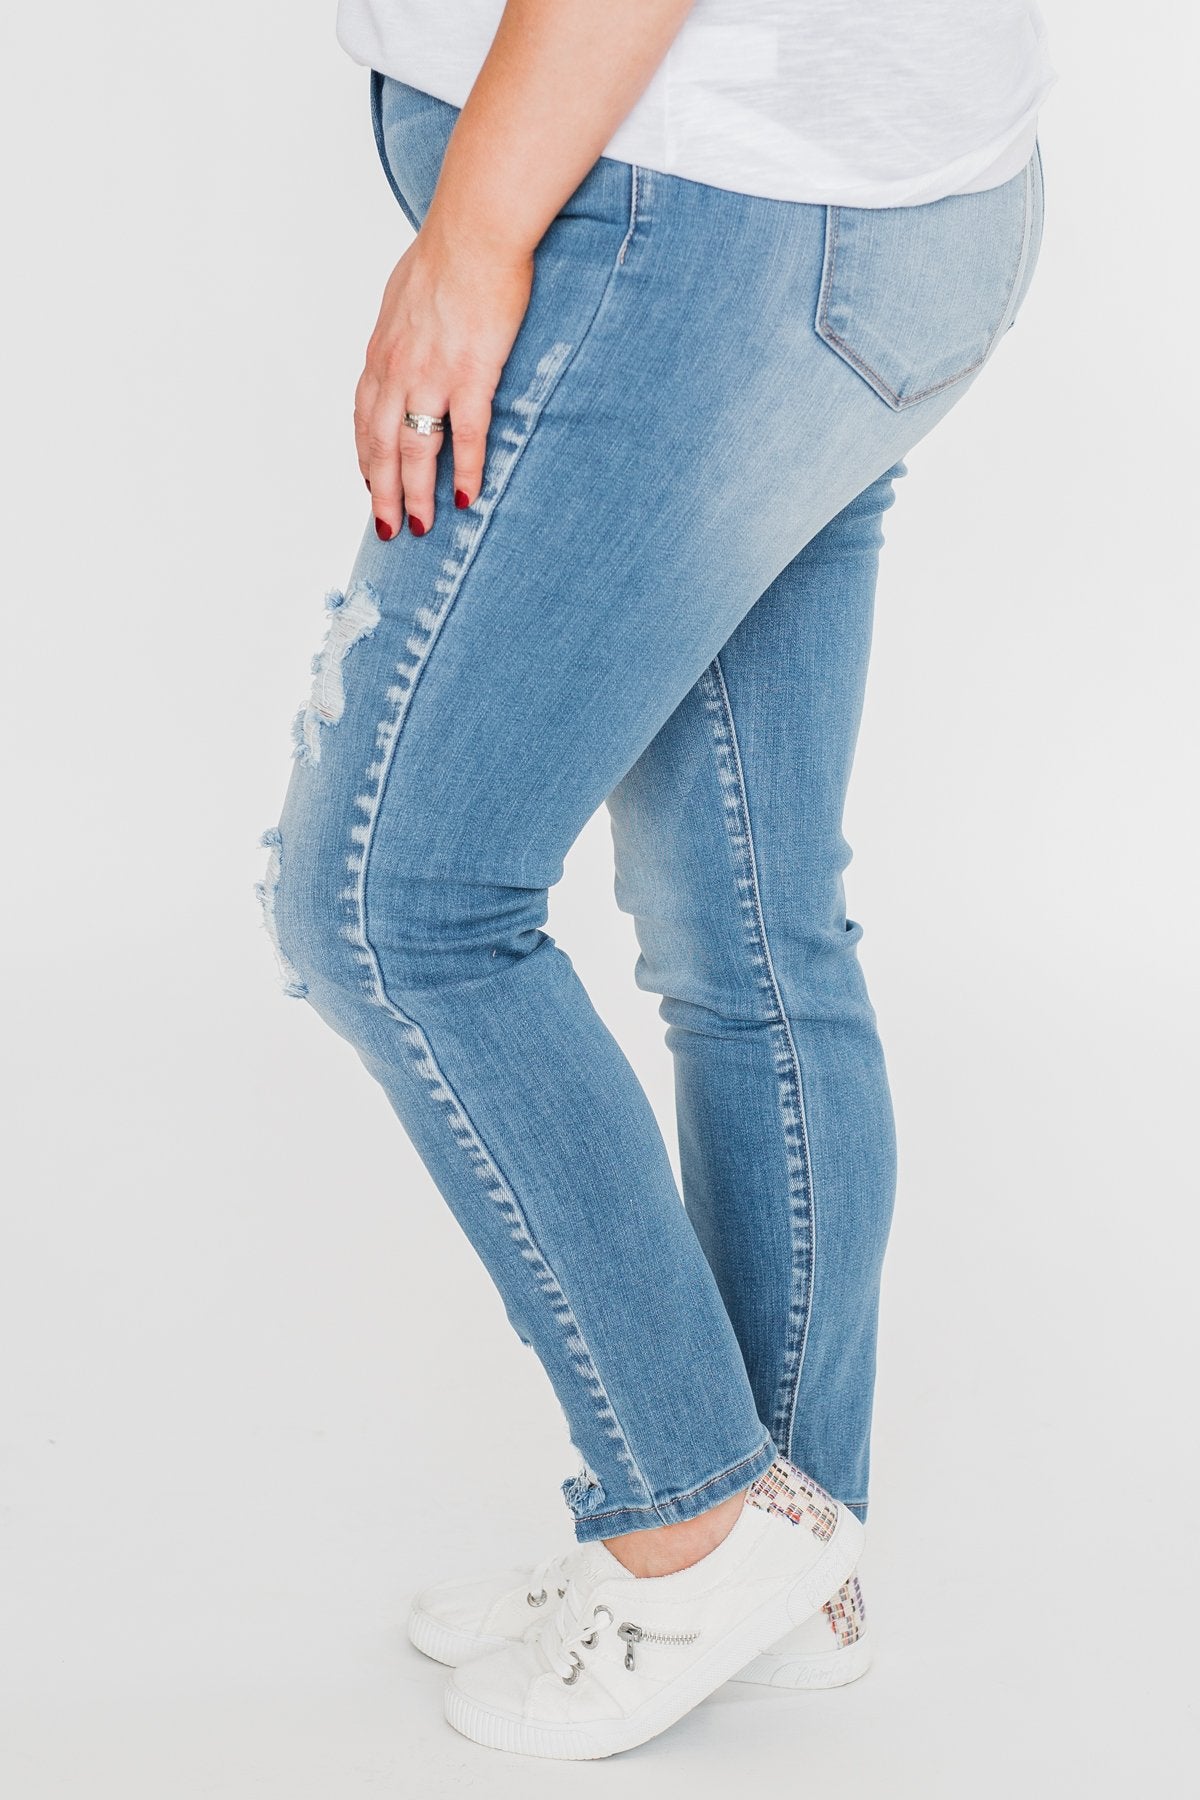 KanCan Distressed Skinny Jeans- Tiffany Wash